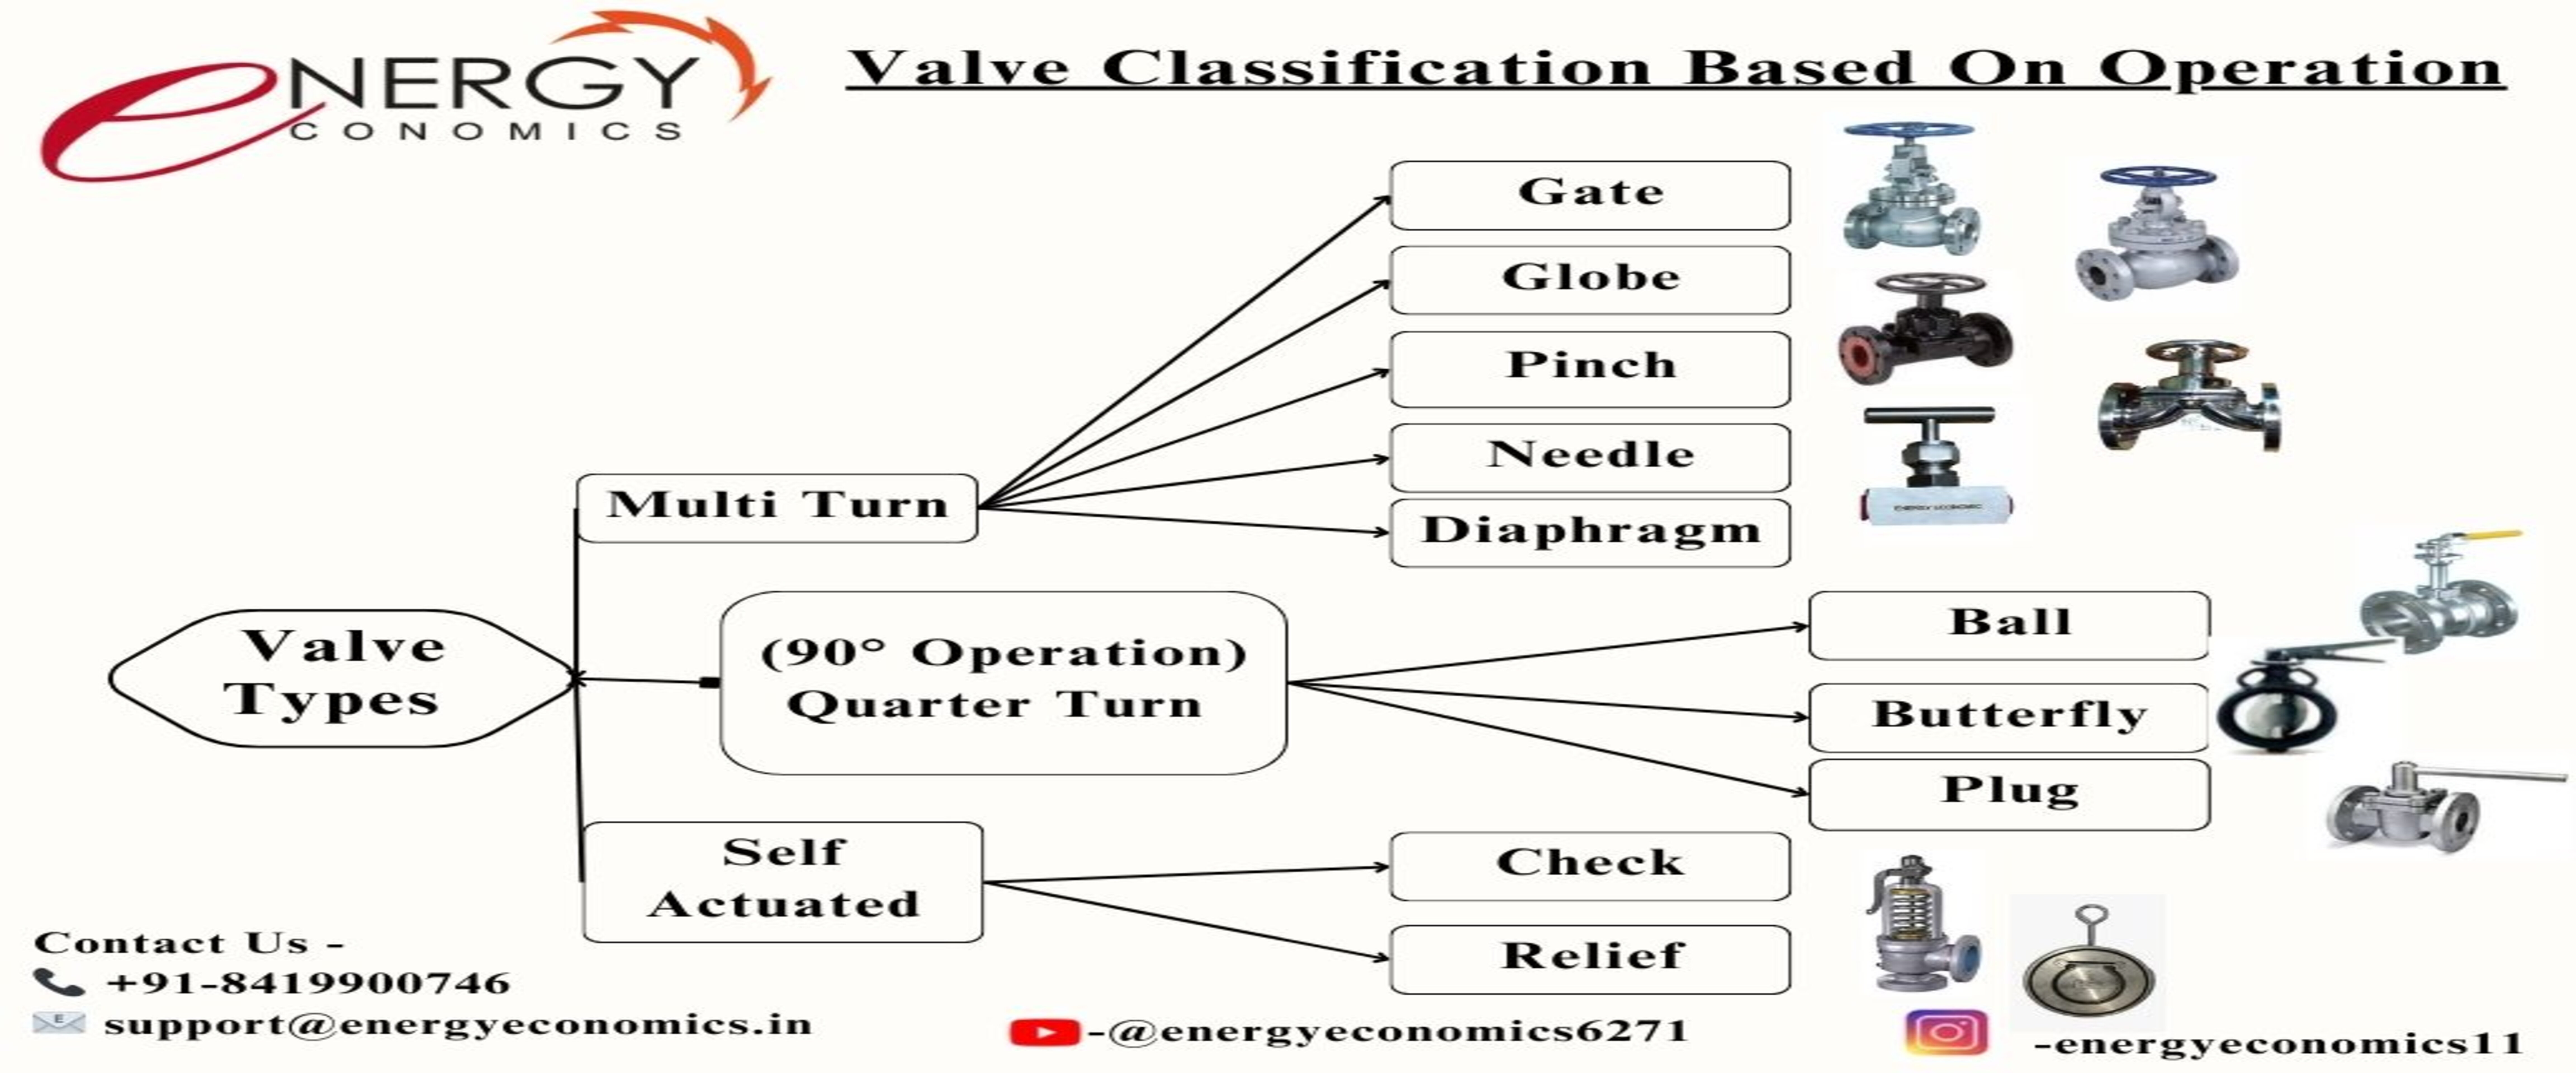 Valve Classification Based On Operation